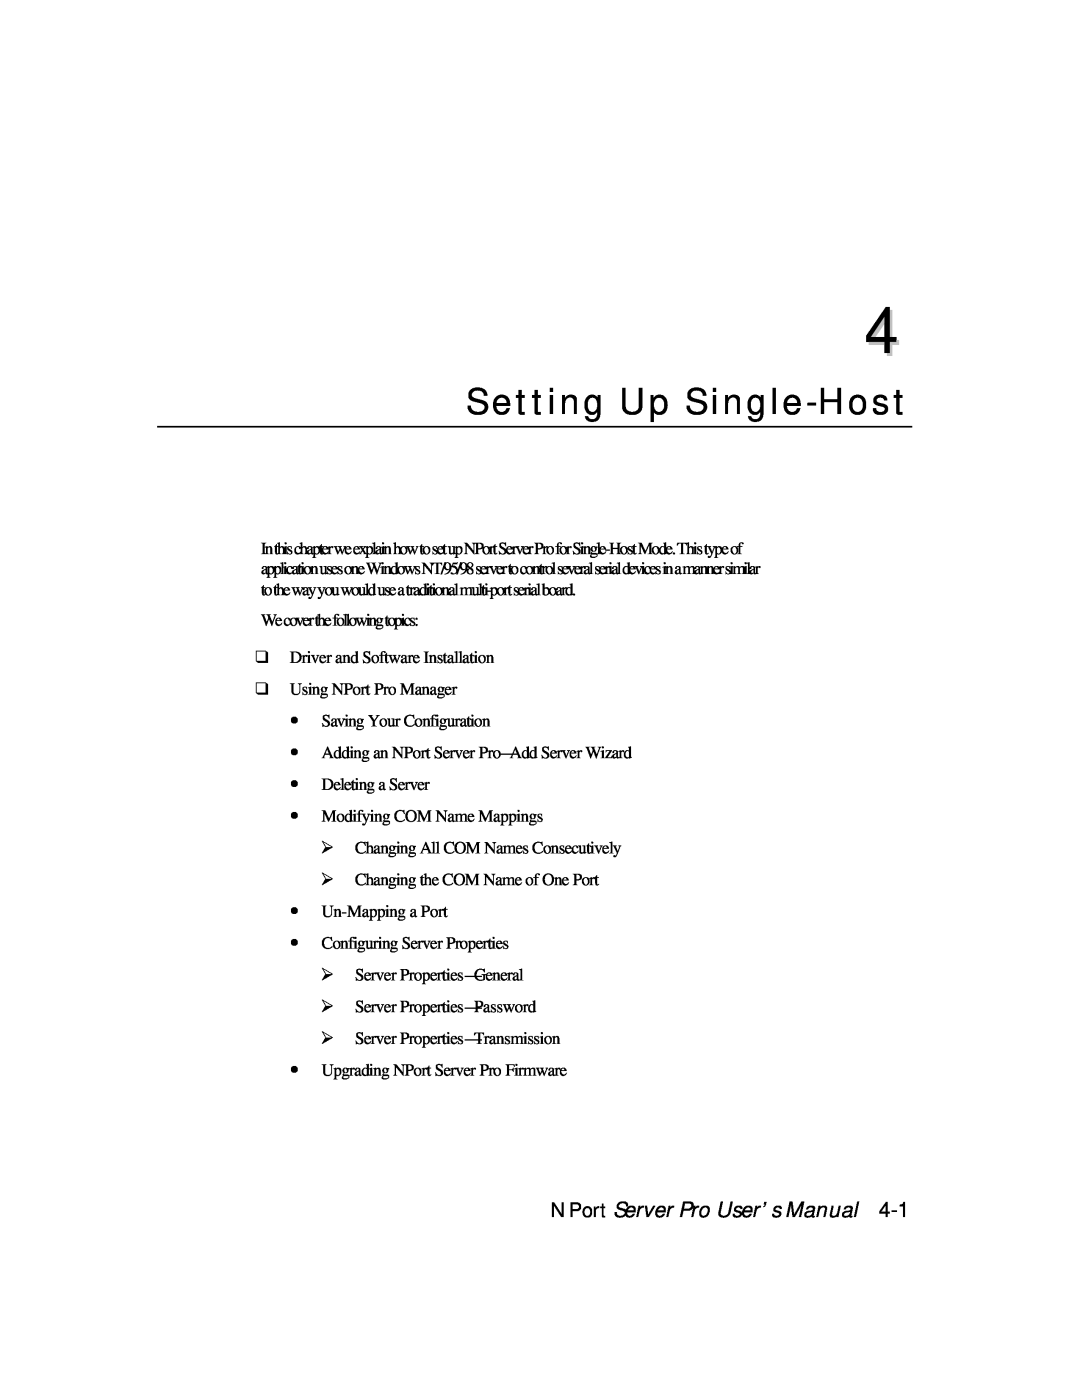 Moxa Technologies DE-308, DE-303 manual Setting Up Single-Host, NPort Server Pro User’s Manual 